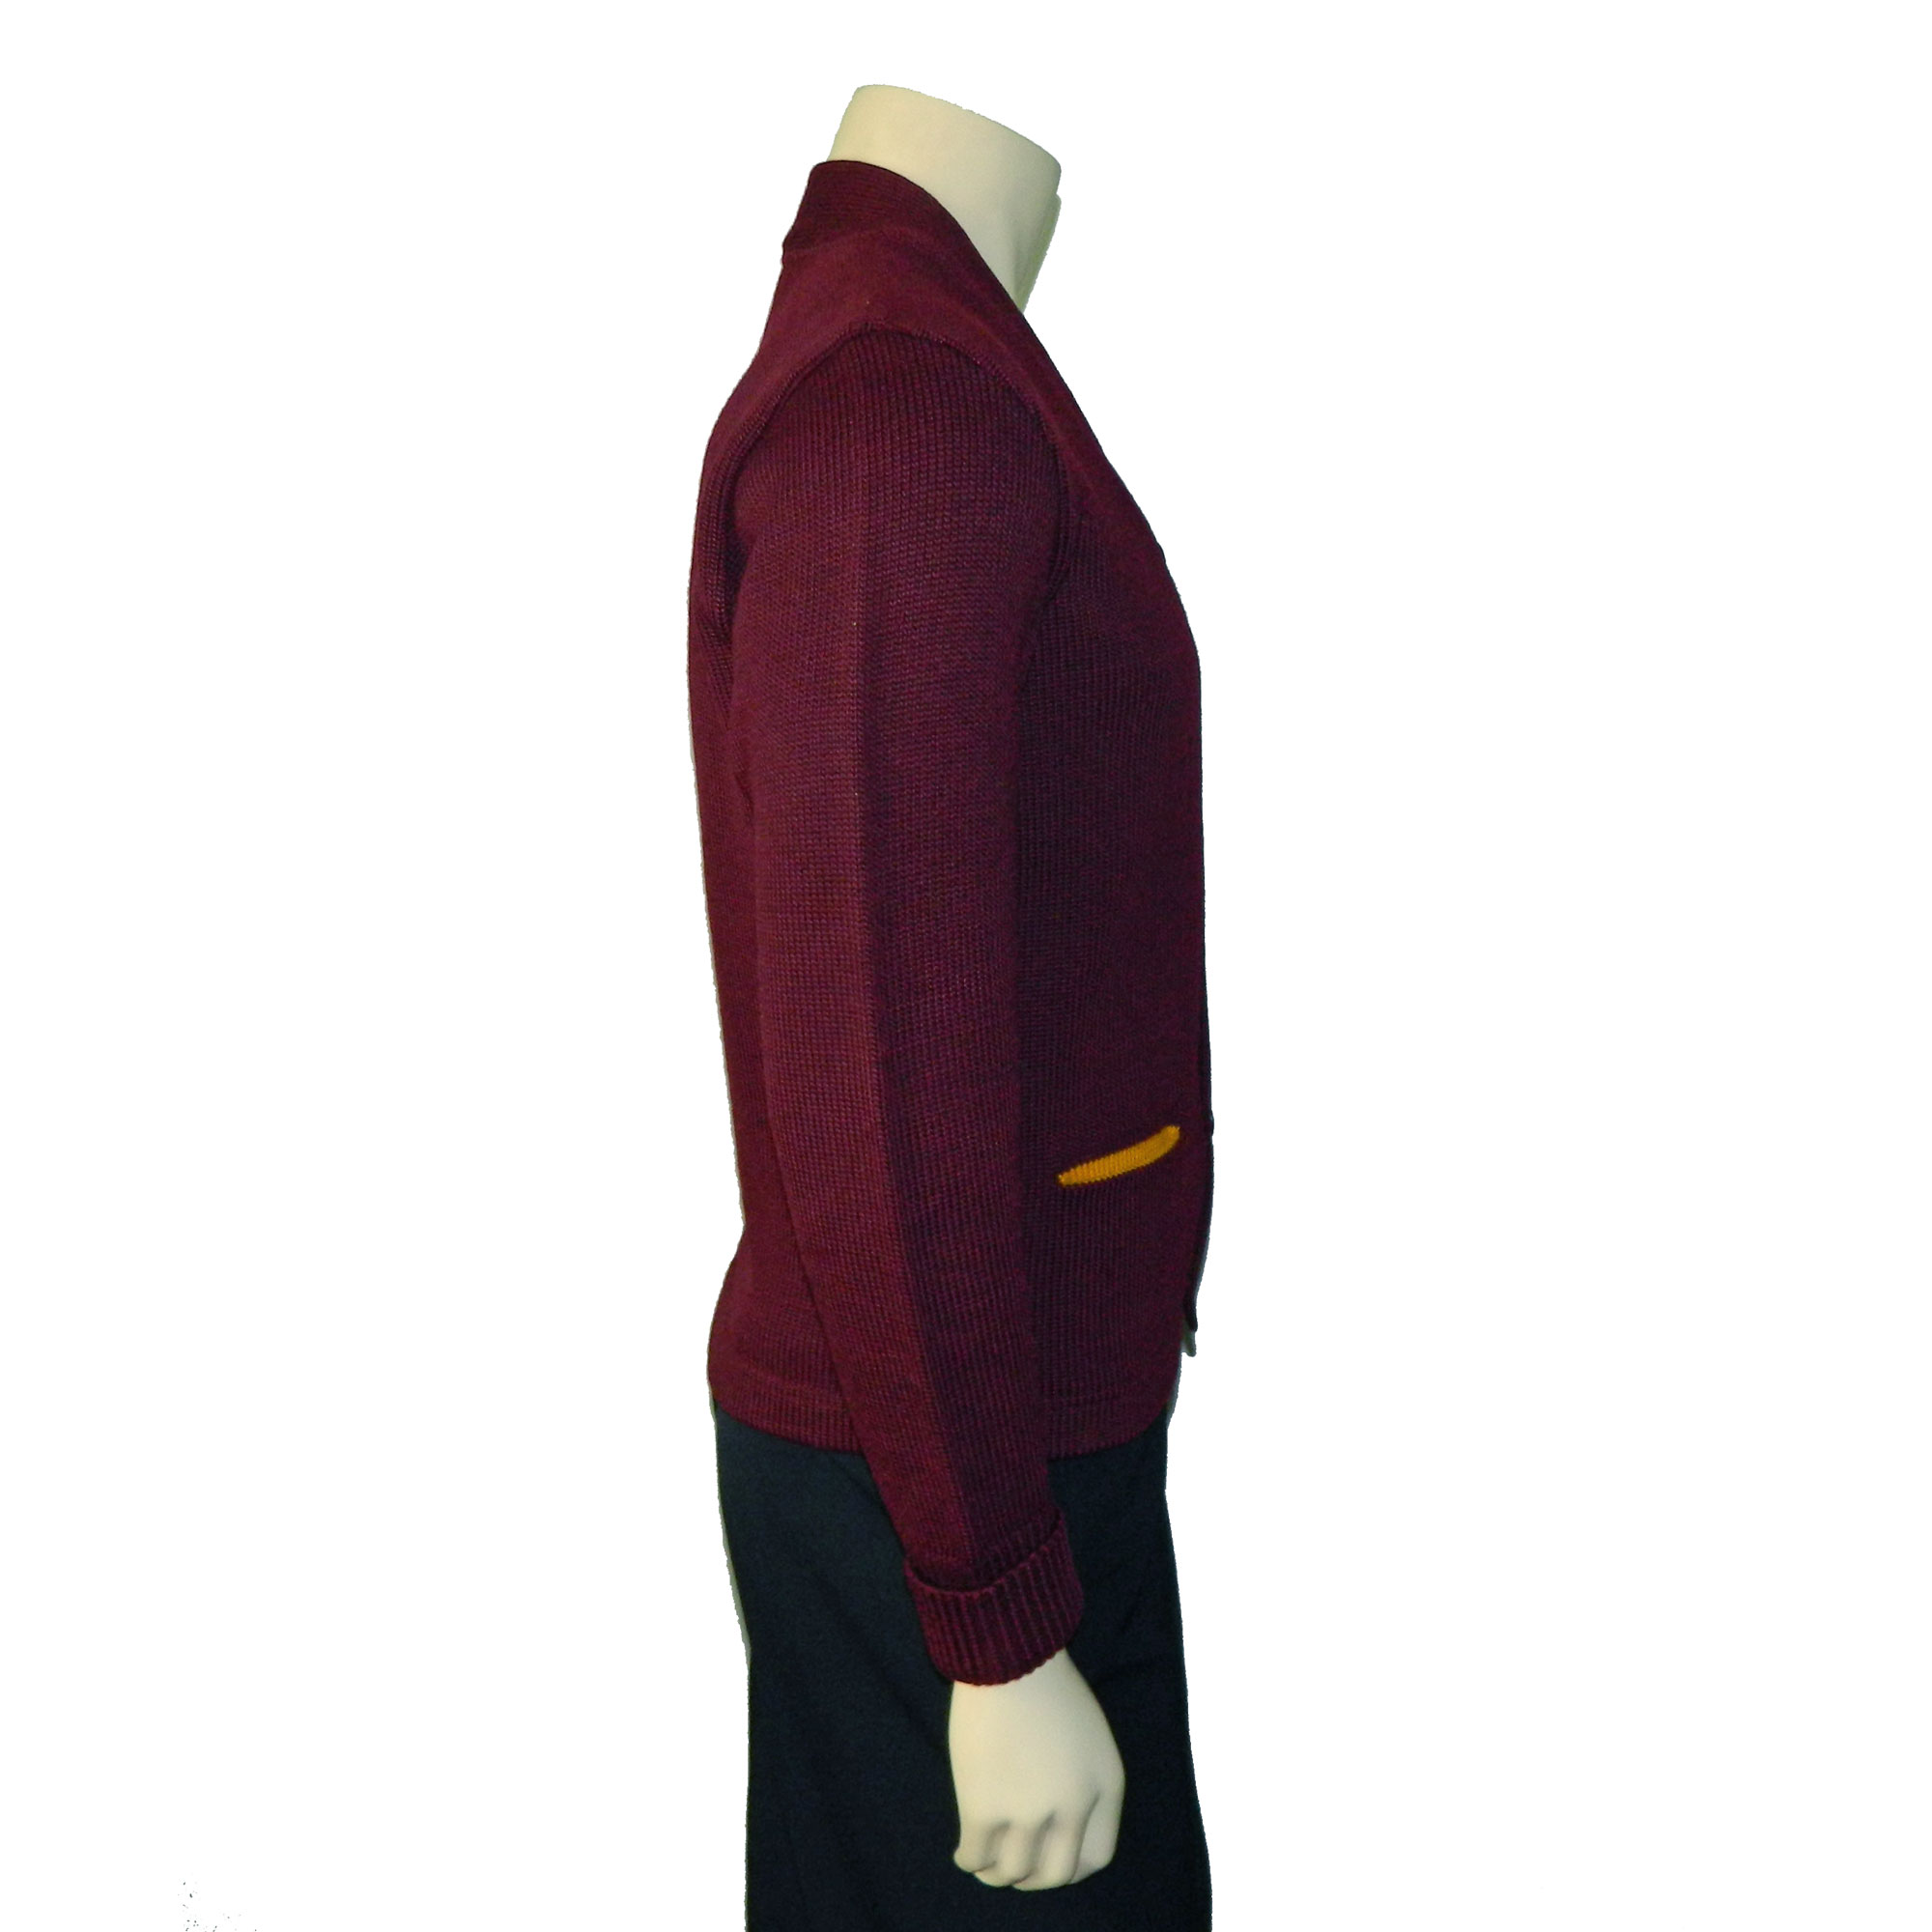 1950's letterman's sweater